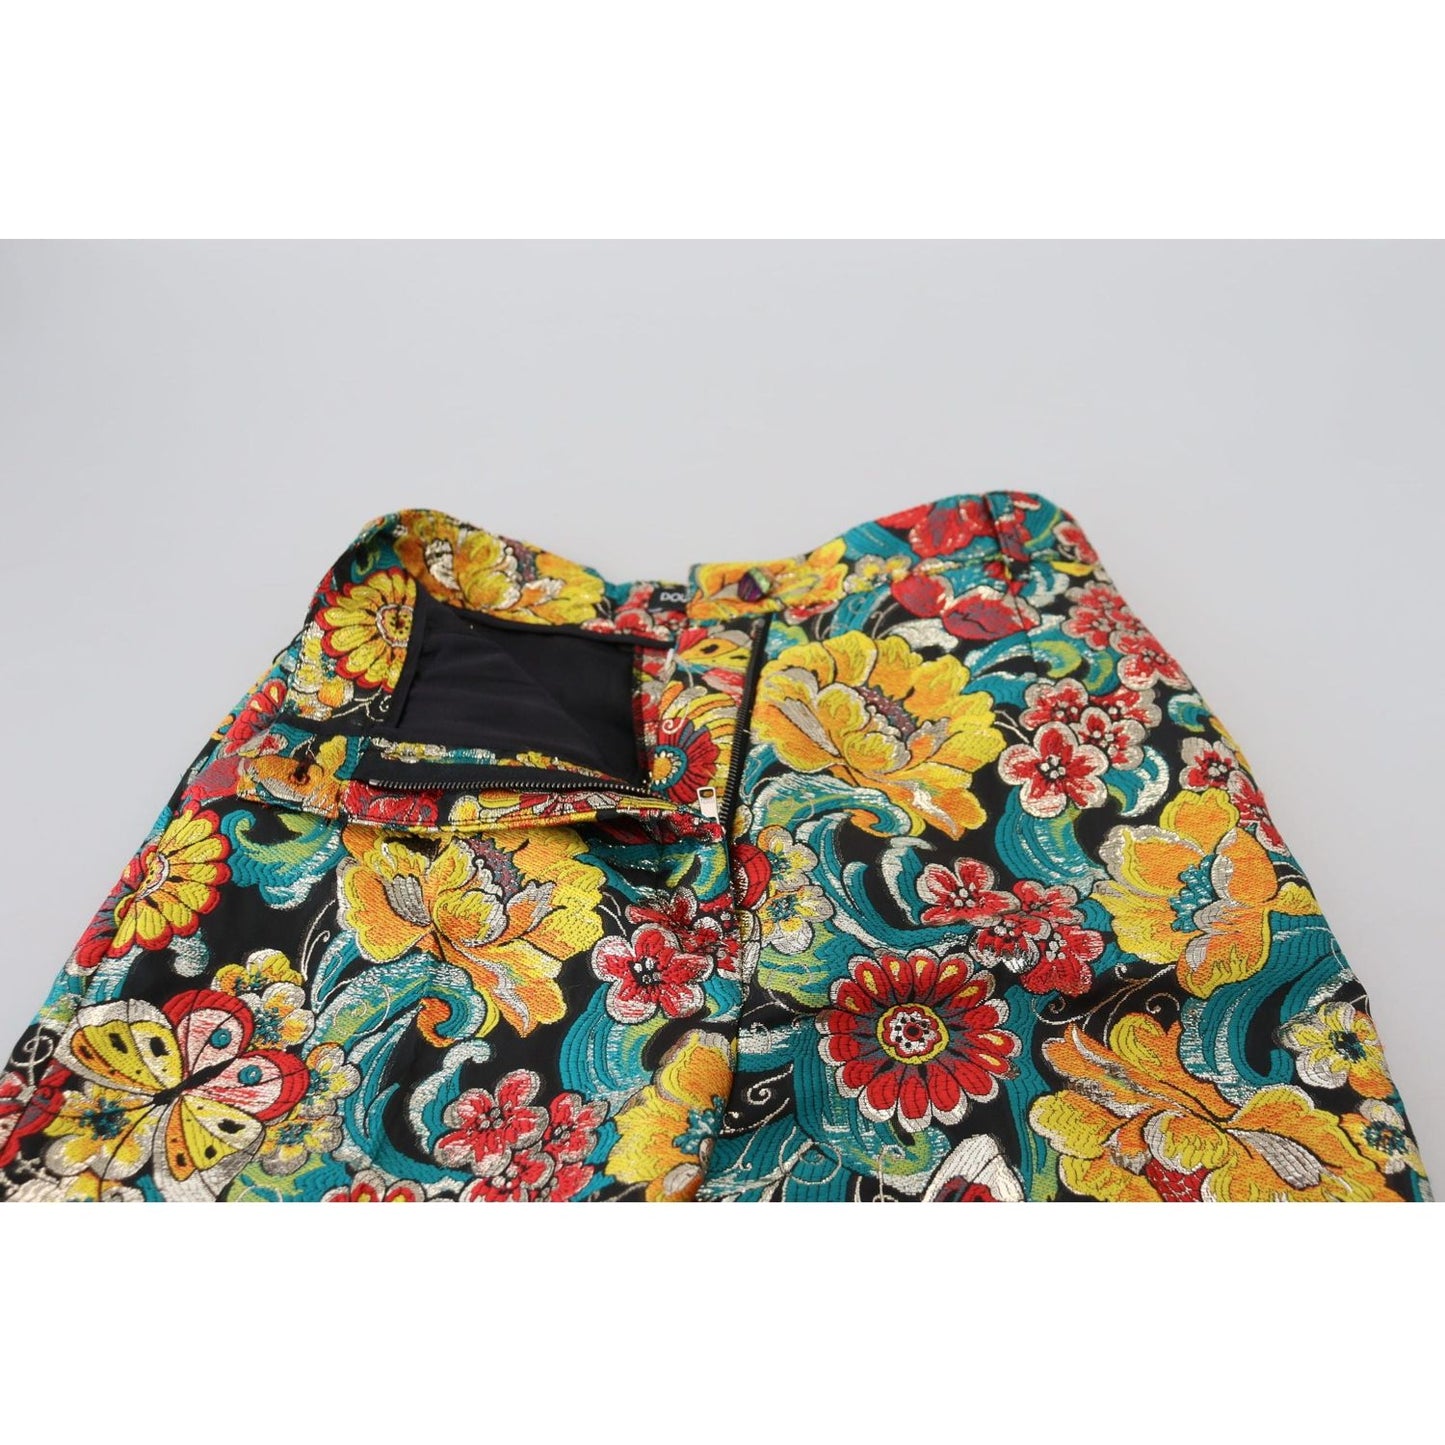 Dolce & Gabbana Elegant Multicolor Woven Pants multicolor-floral-women-flared-pants